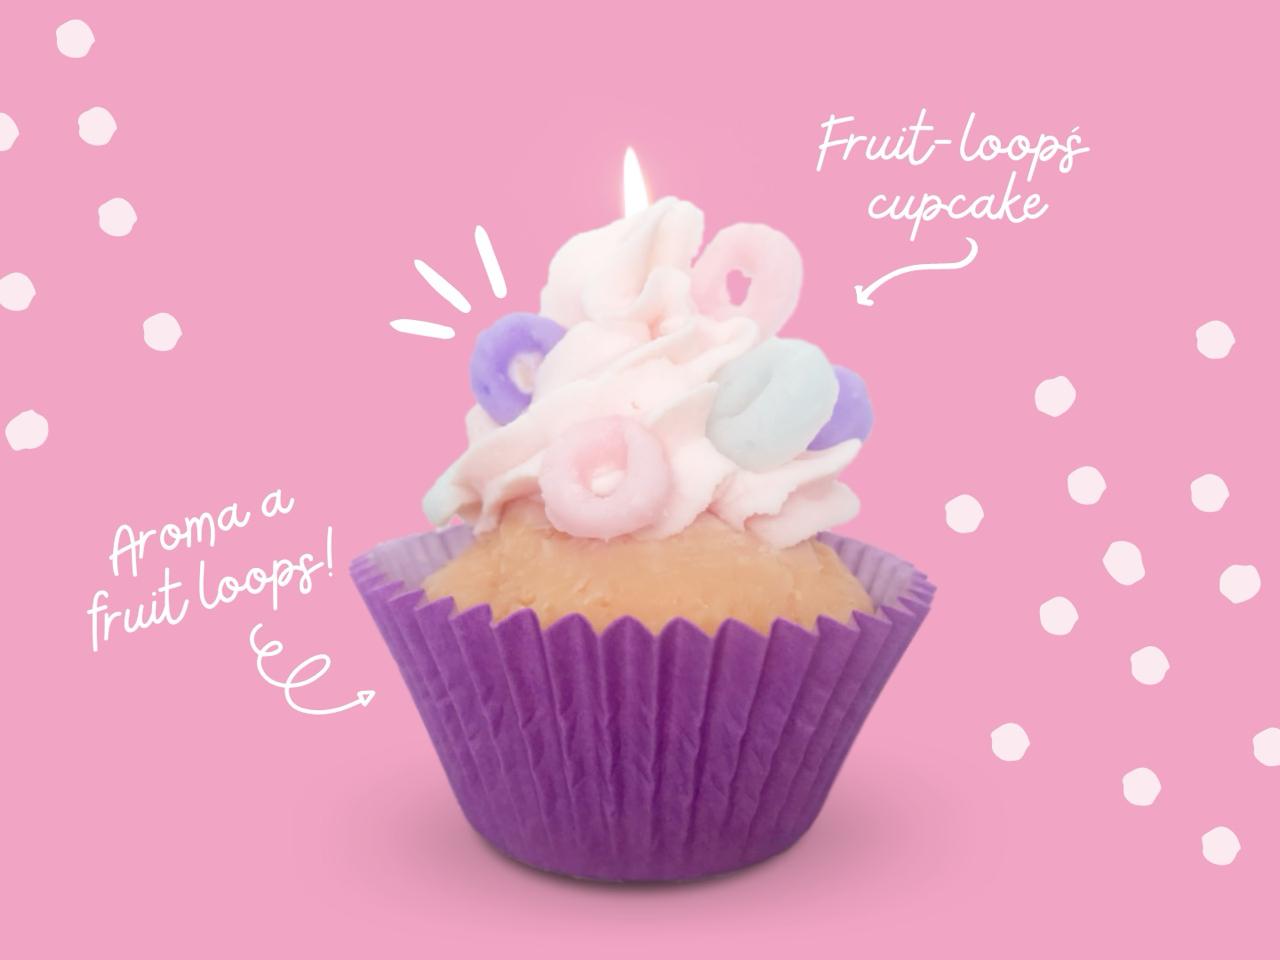 Fruit loops Cupcake